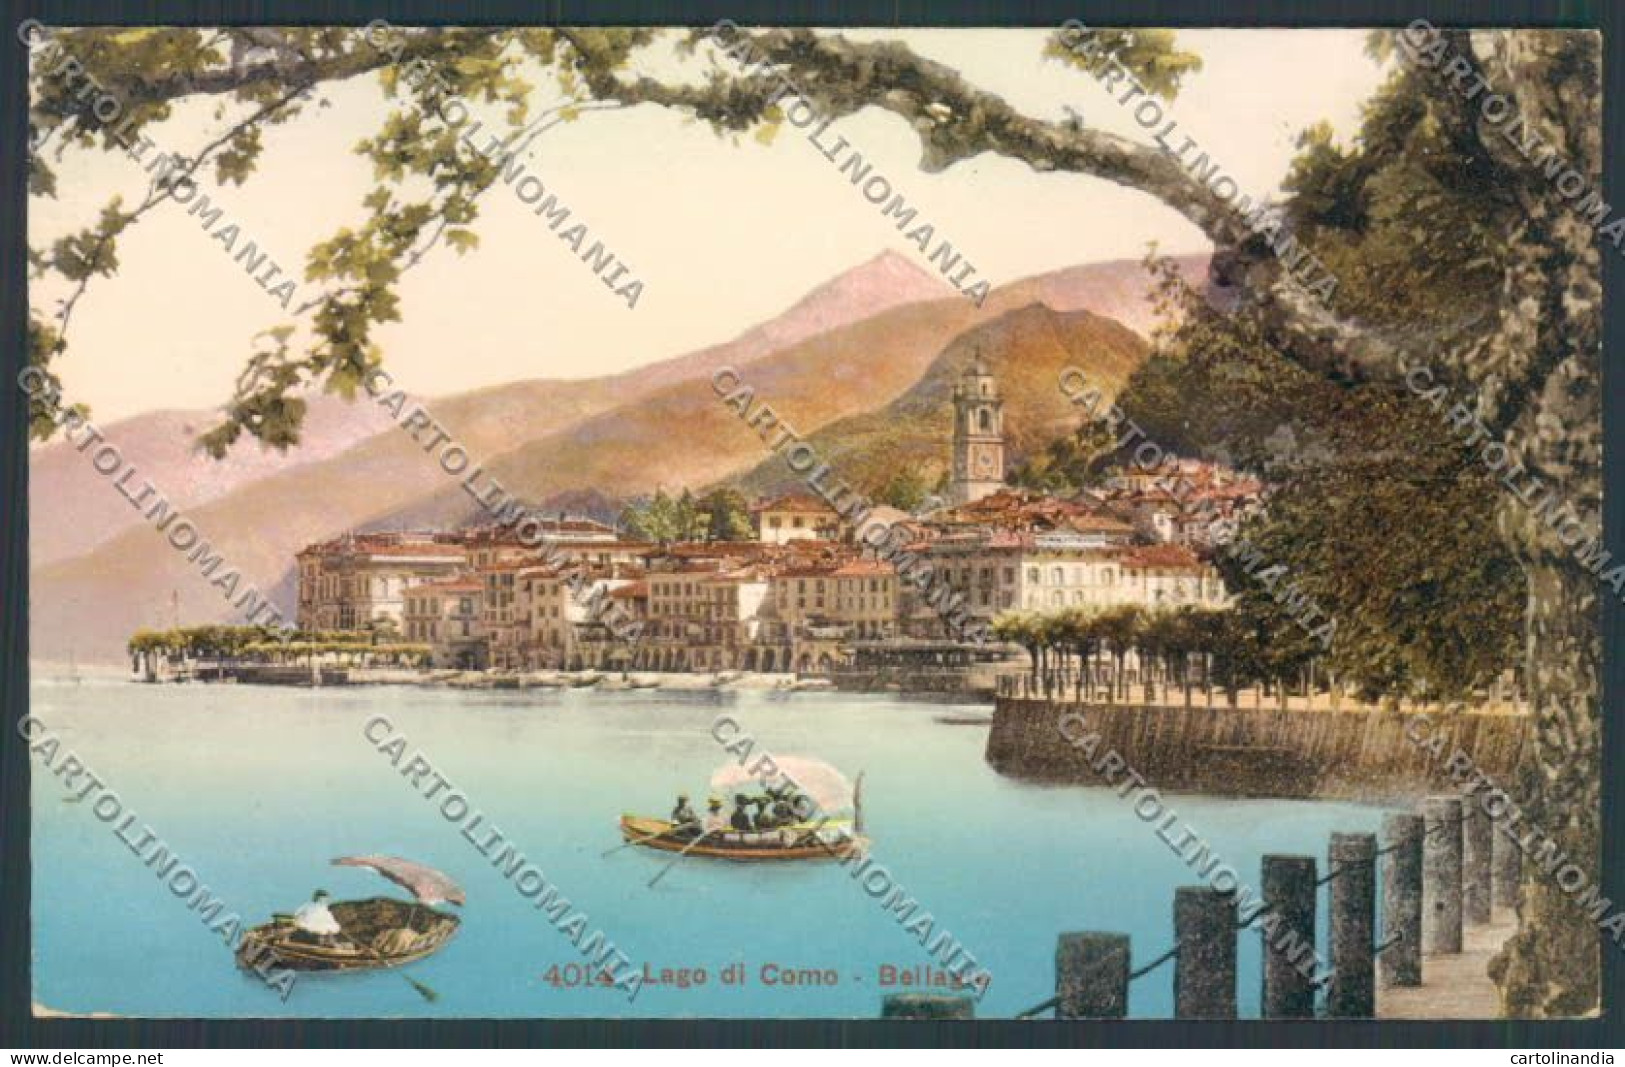 Como Bellagio Barca Cartolina LQ1882 - Como